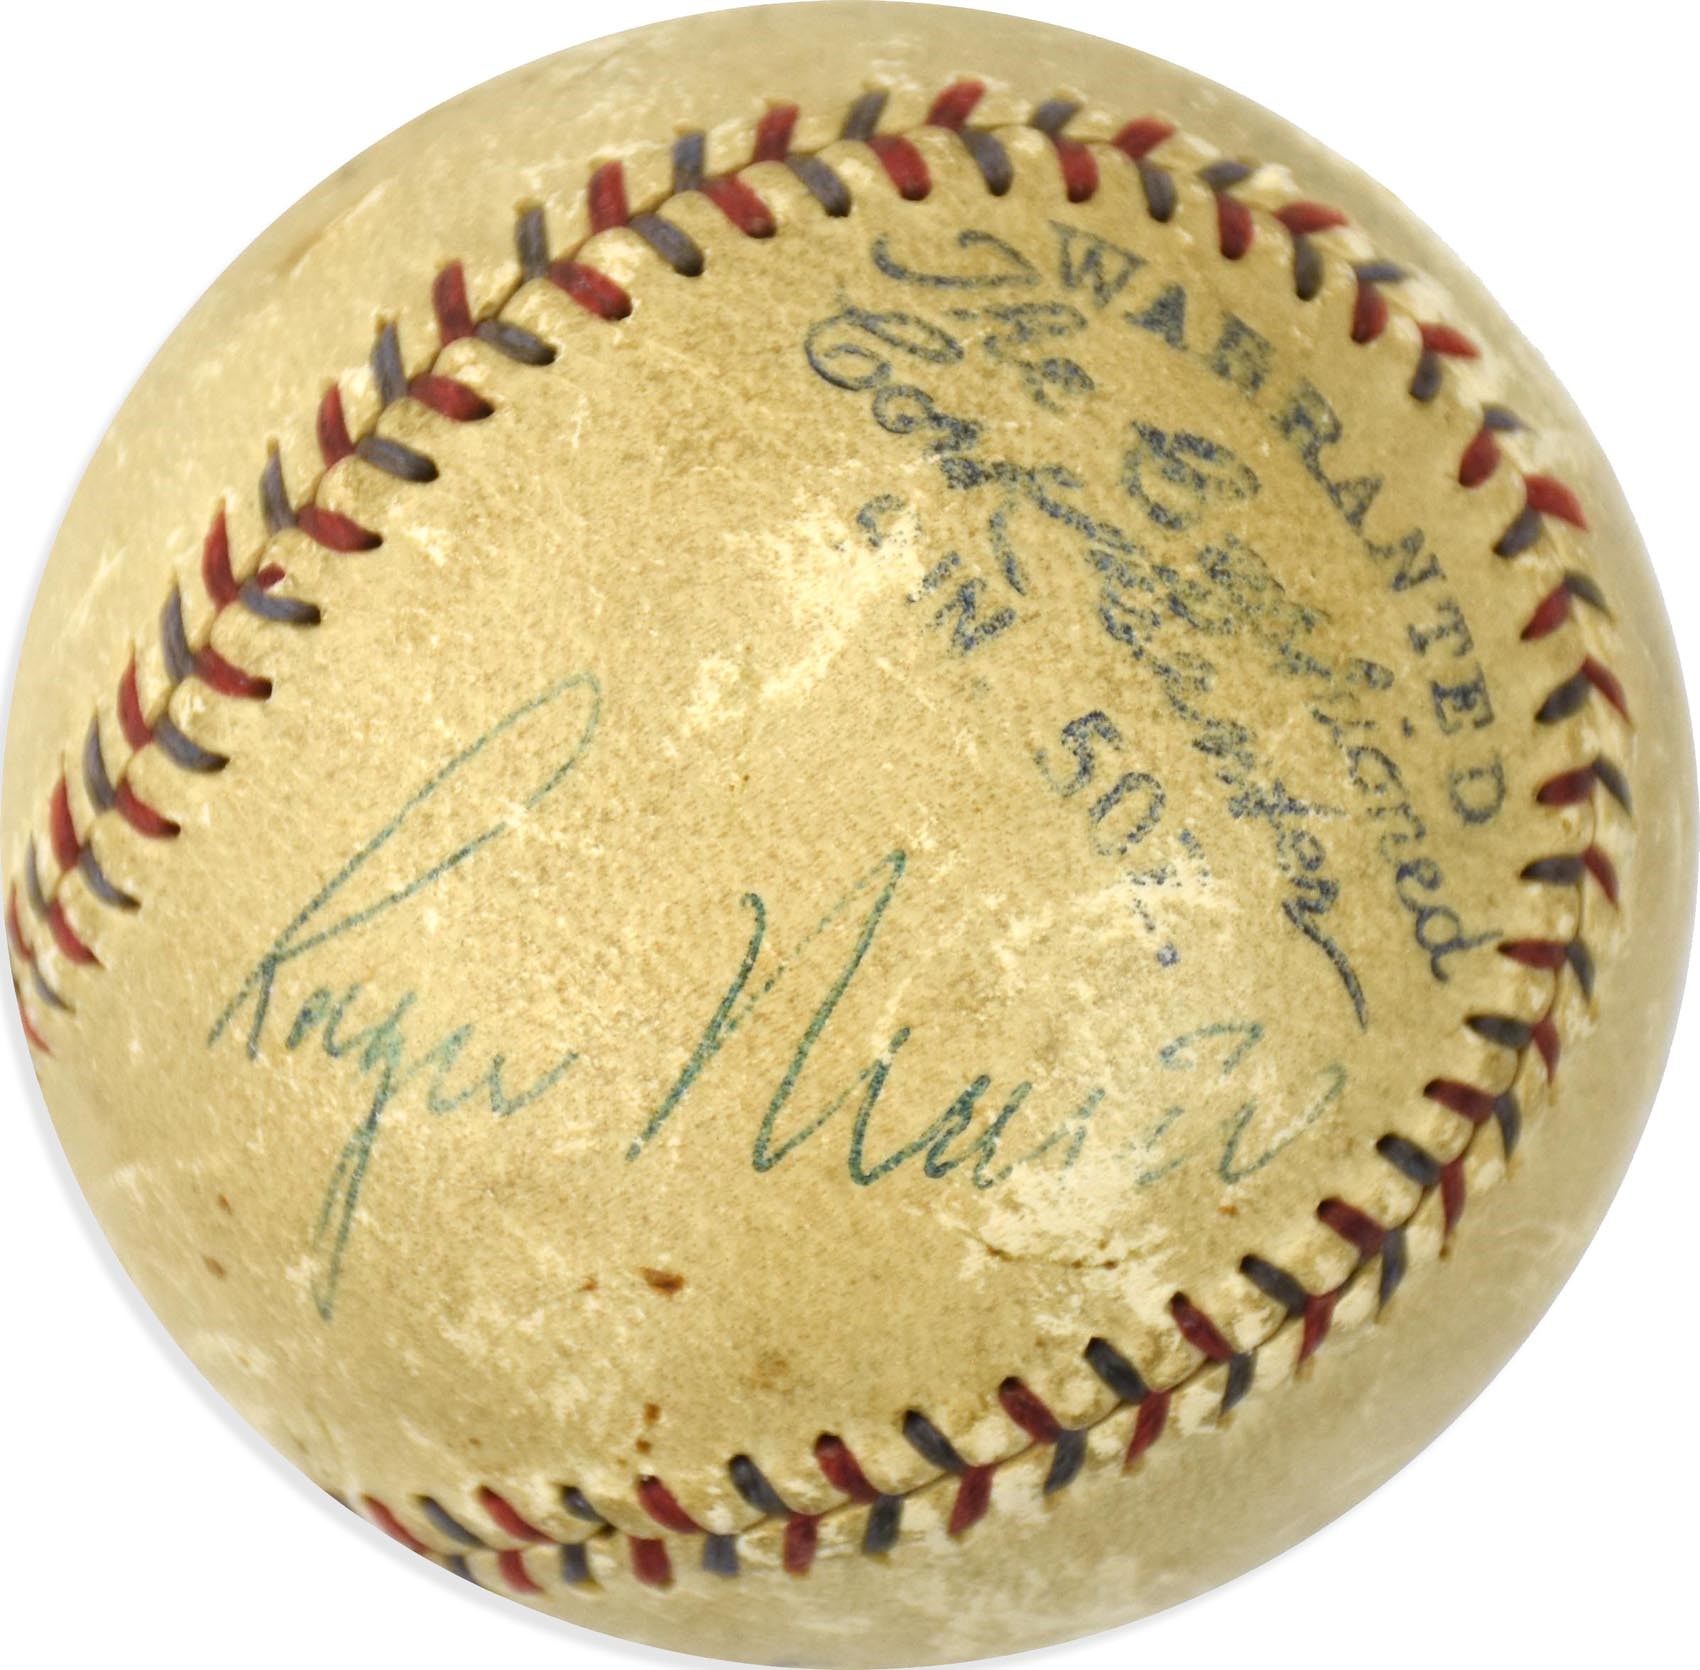 - Circa 1961 Roger Maris Signed OAL Reach Baseball